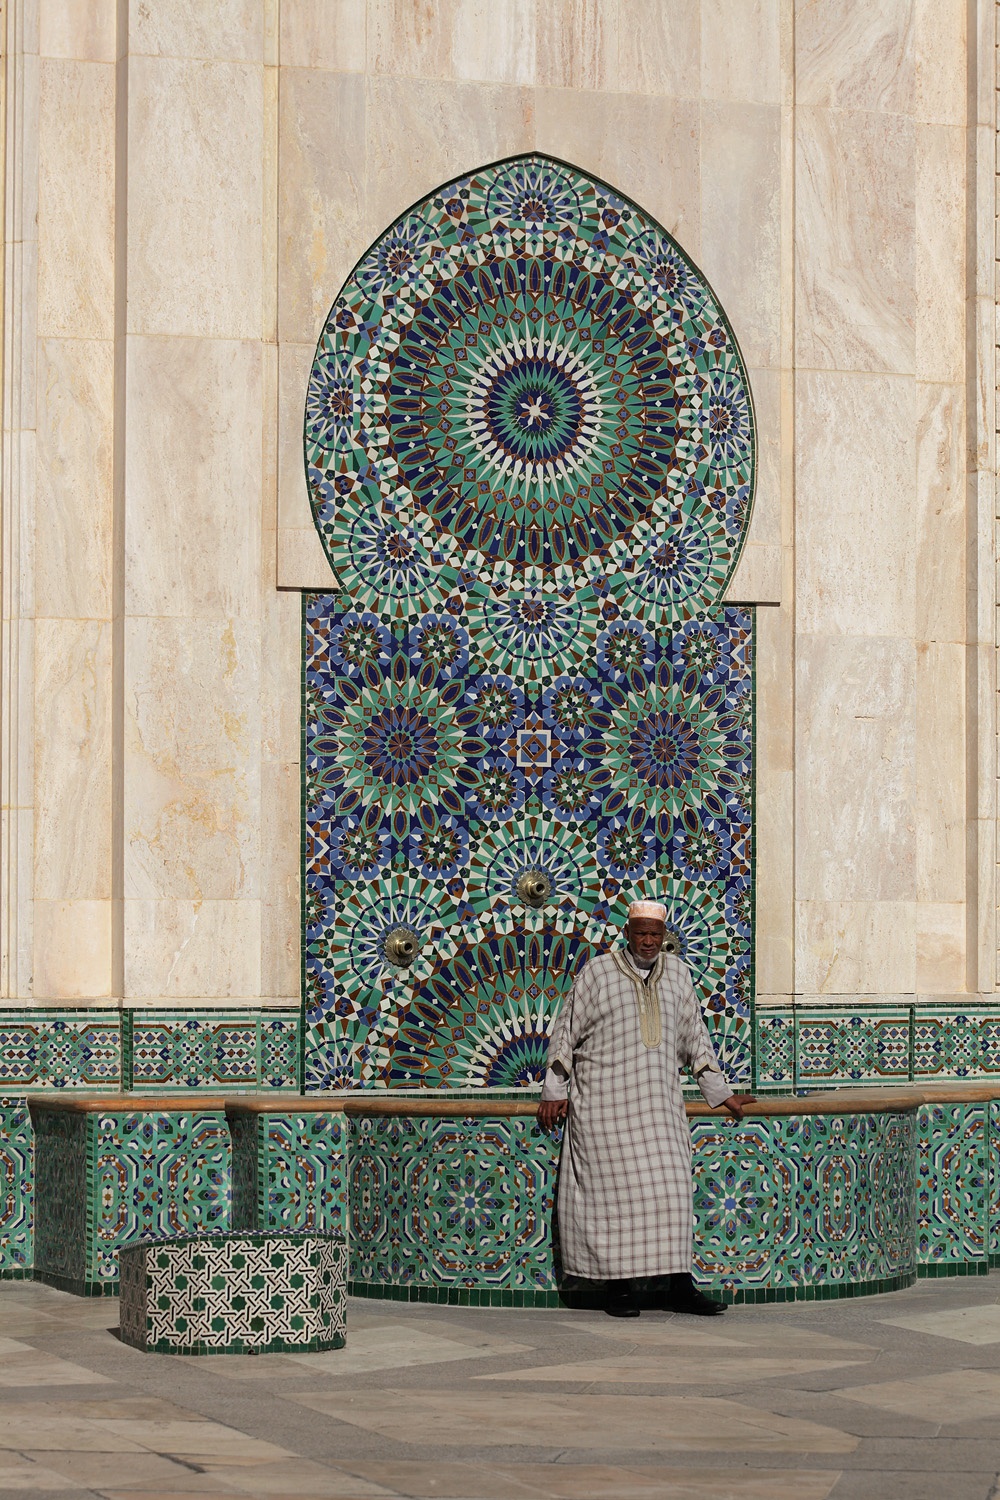 bill-hocker-hassan-ii-mosque-casablanca-morocco-2013